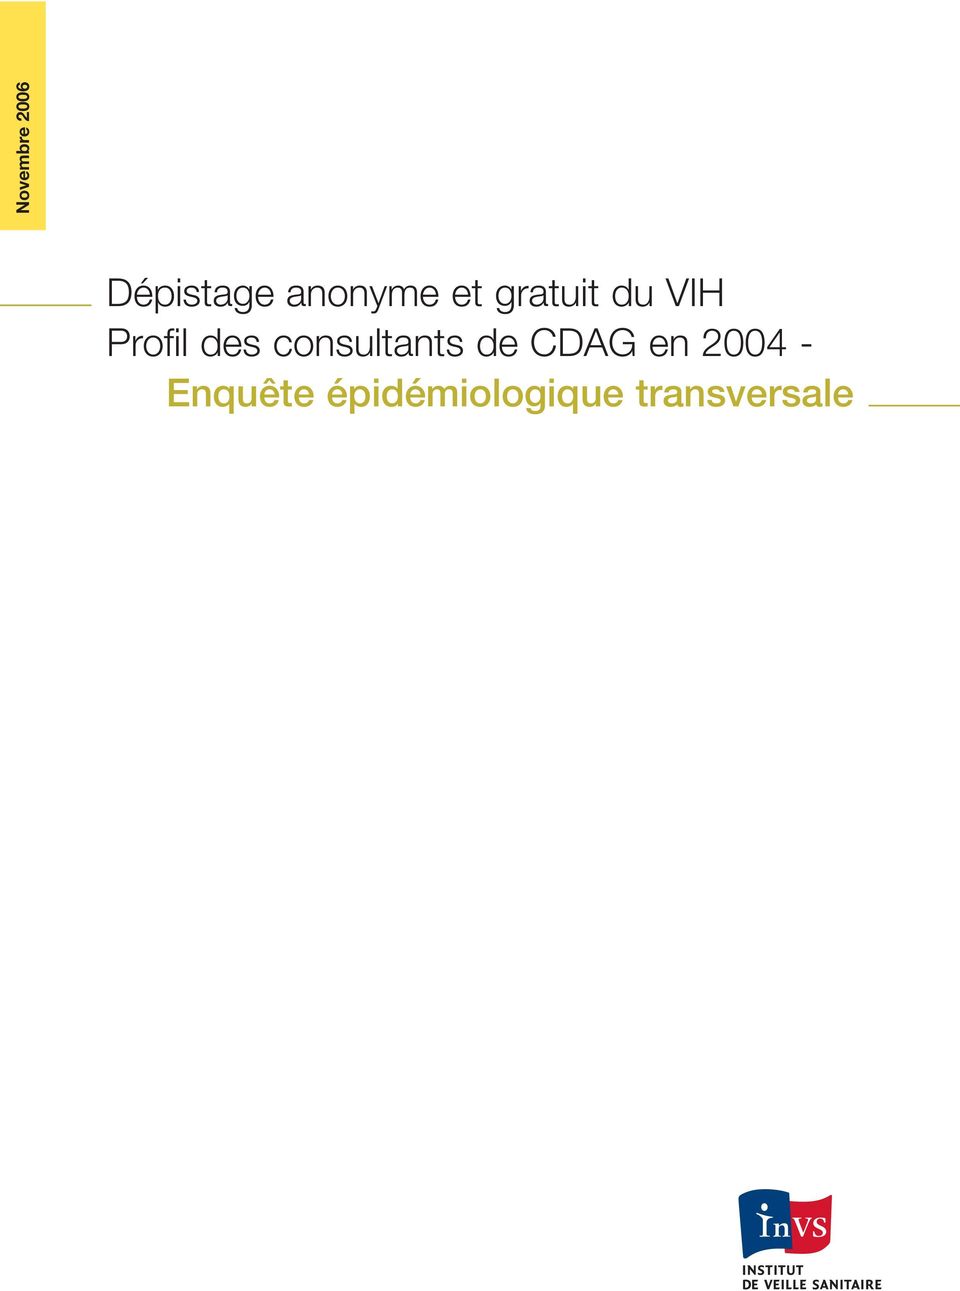 CDAG en 2004 - Enquête